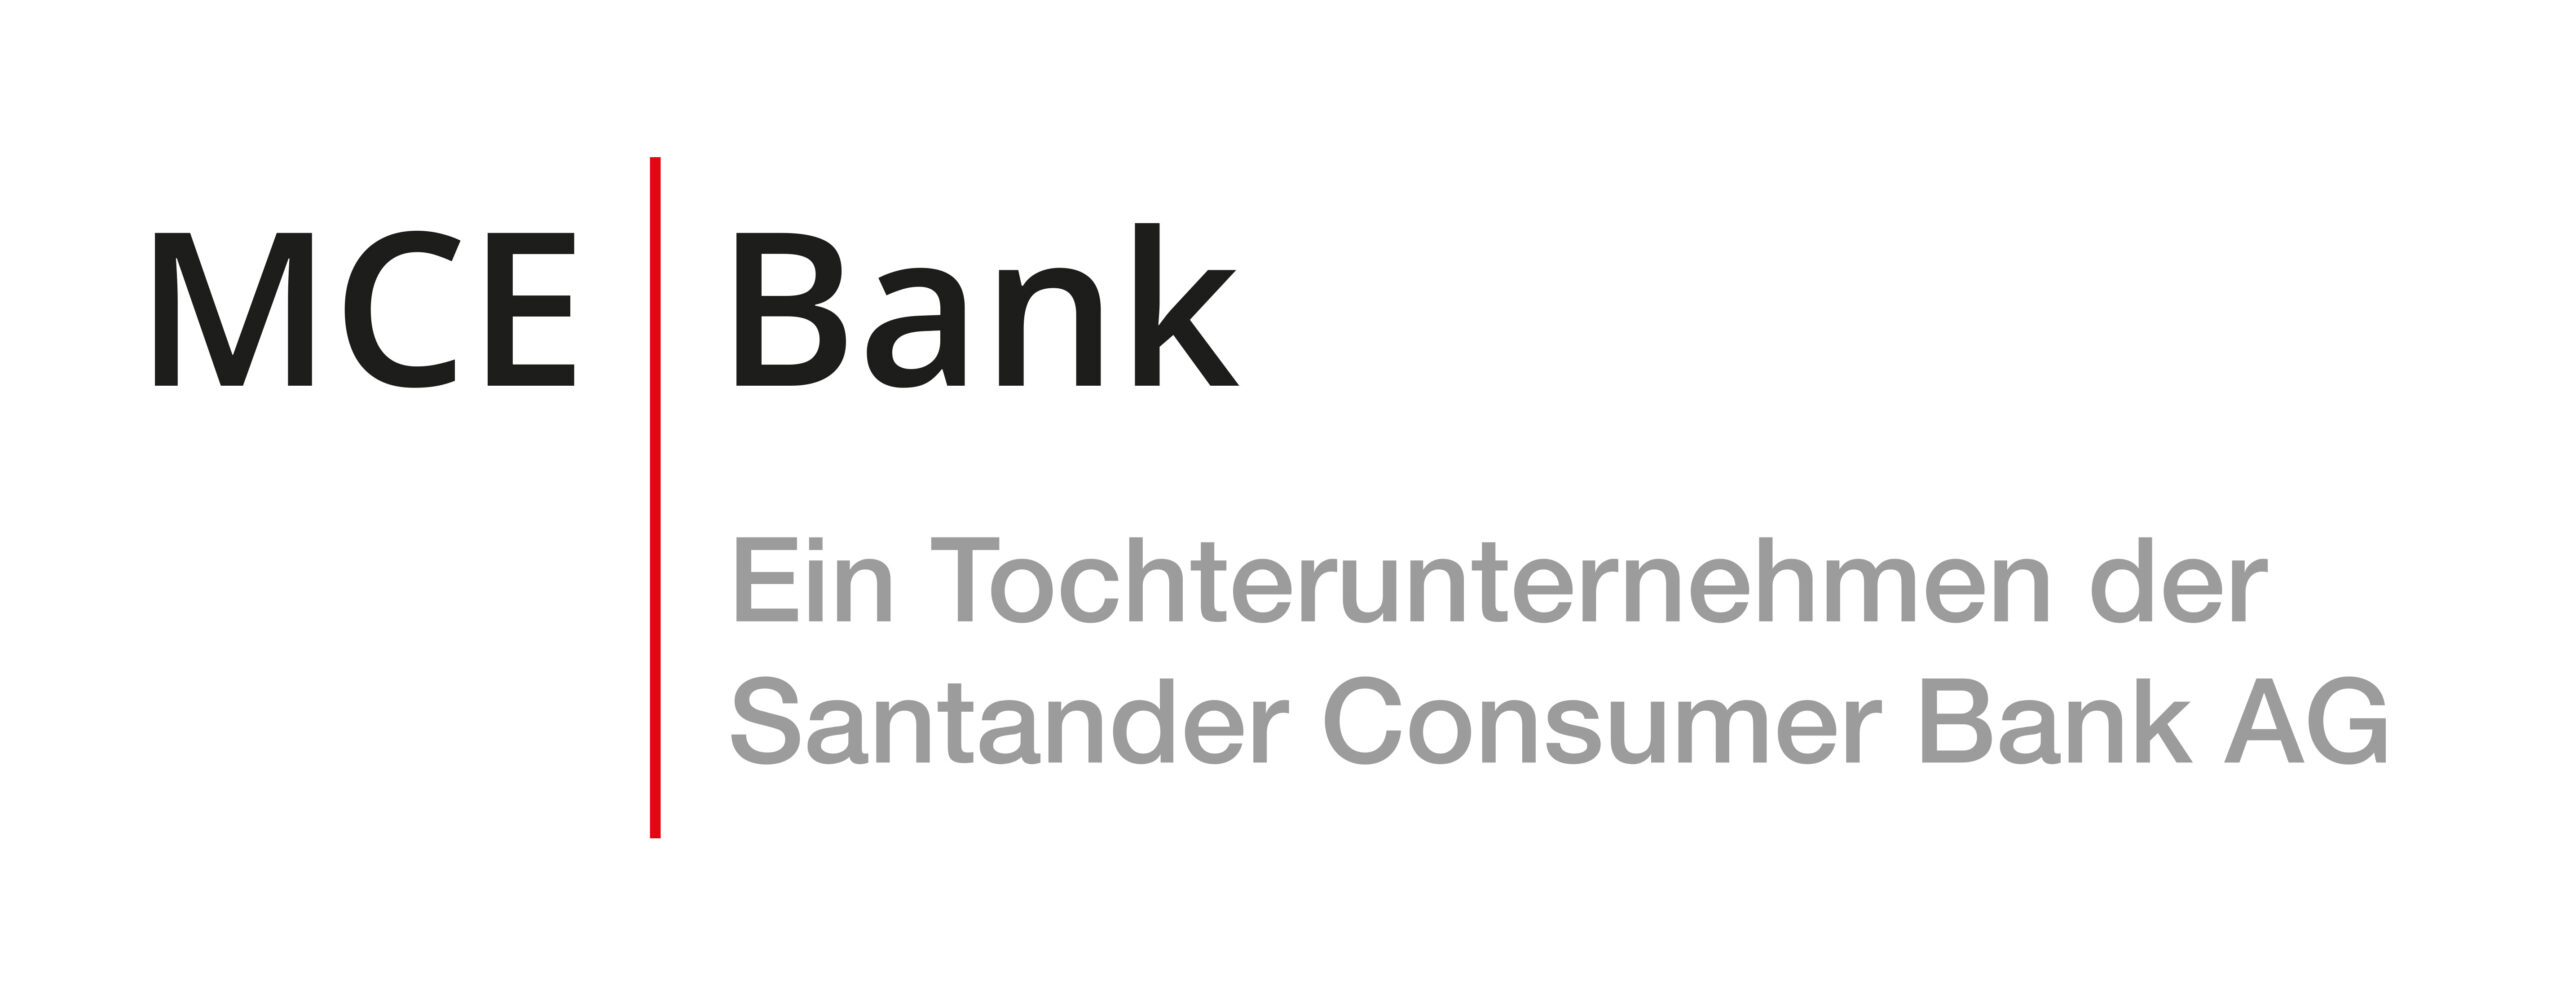 MCE Bank GmbH &#8211; Flensburger Developer Unternehmen